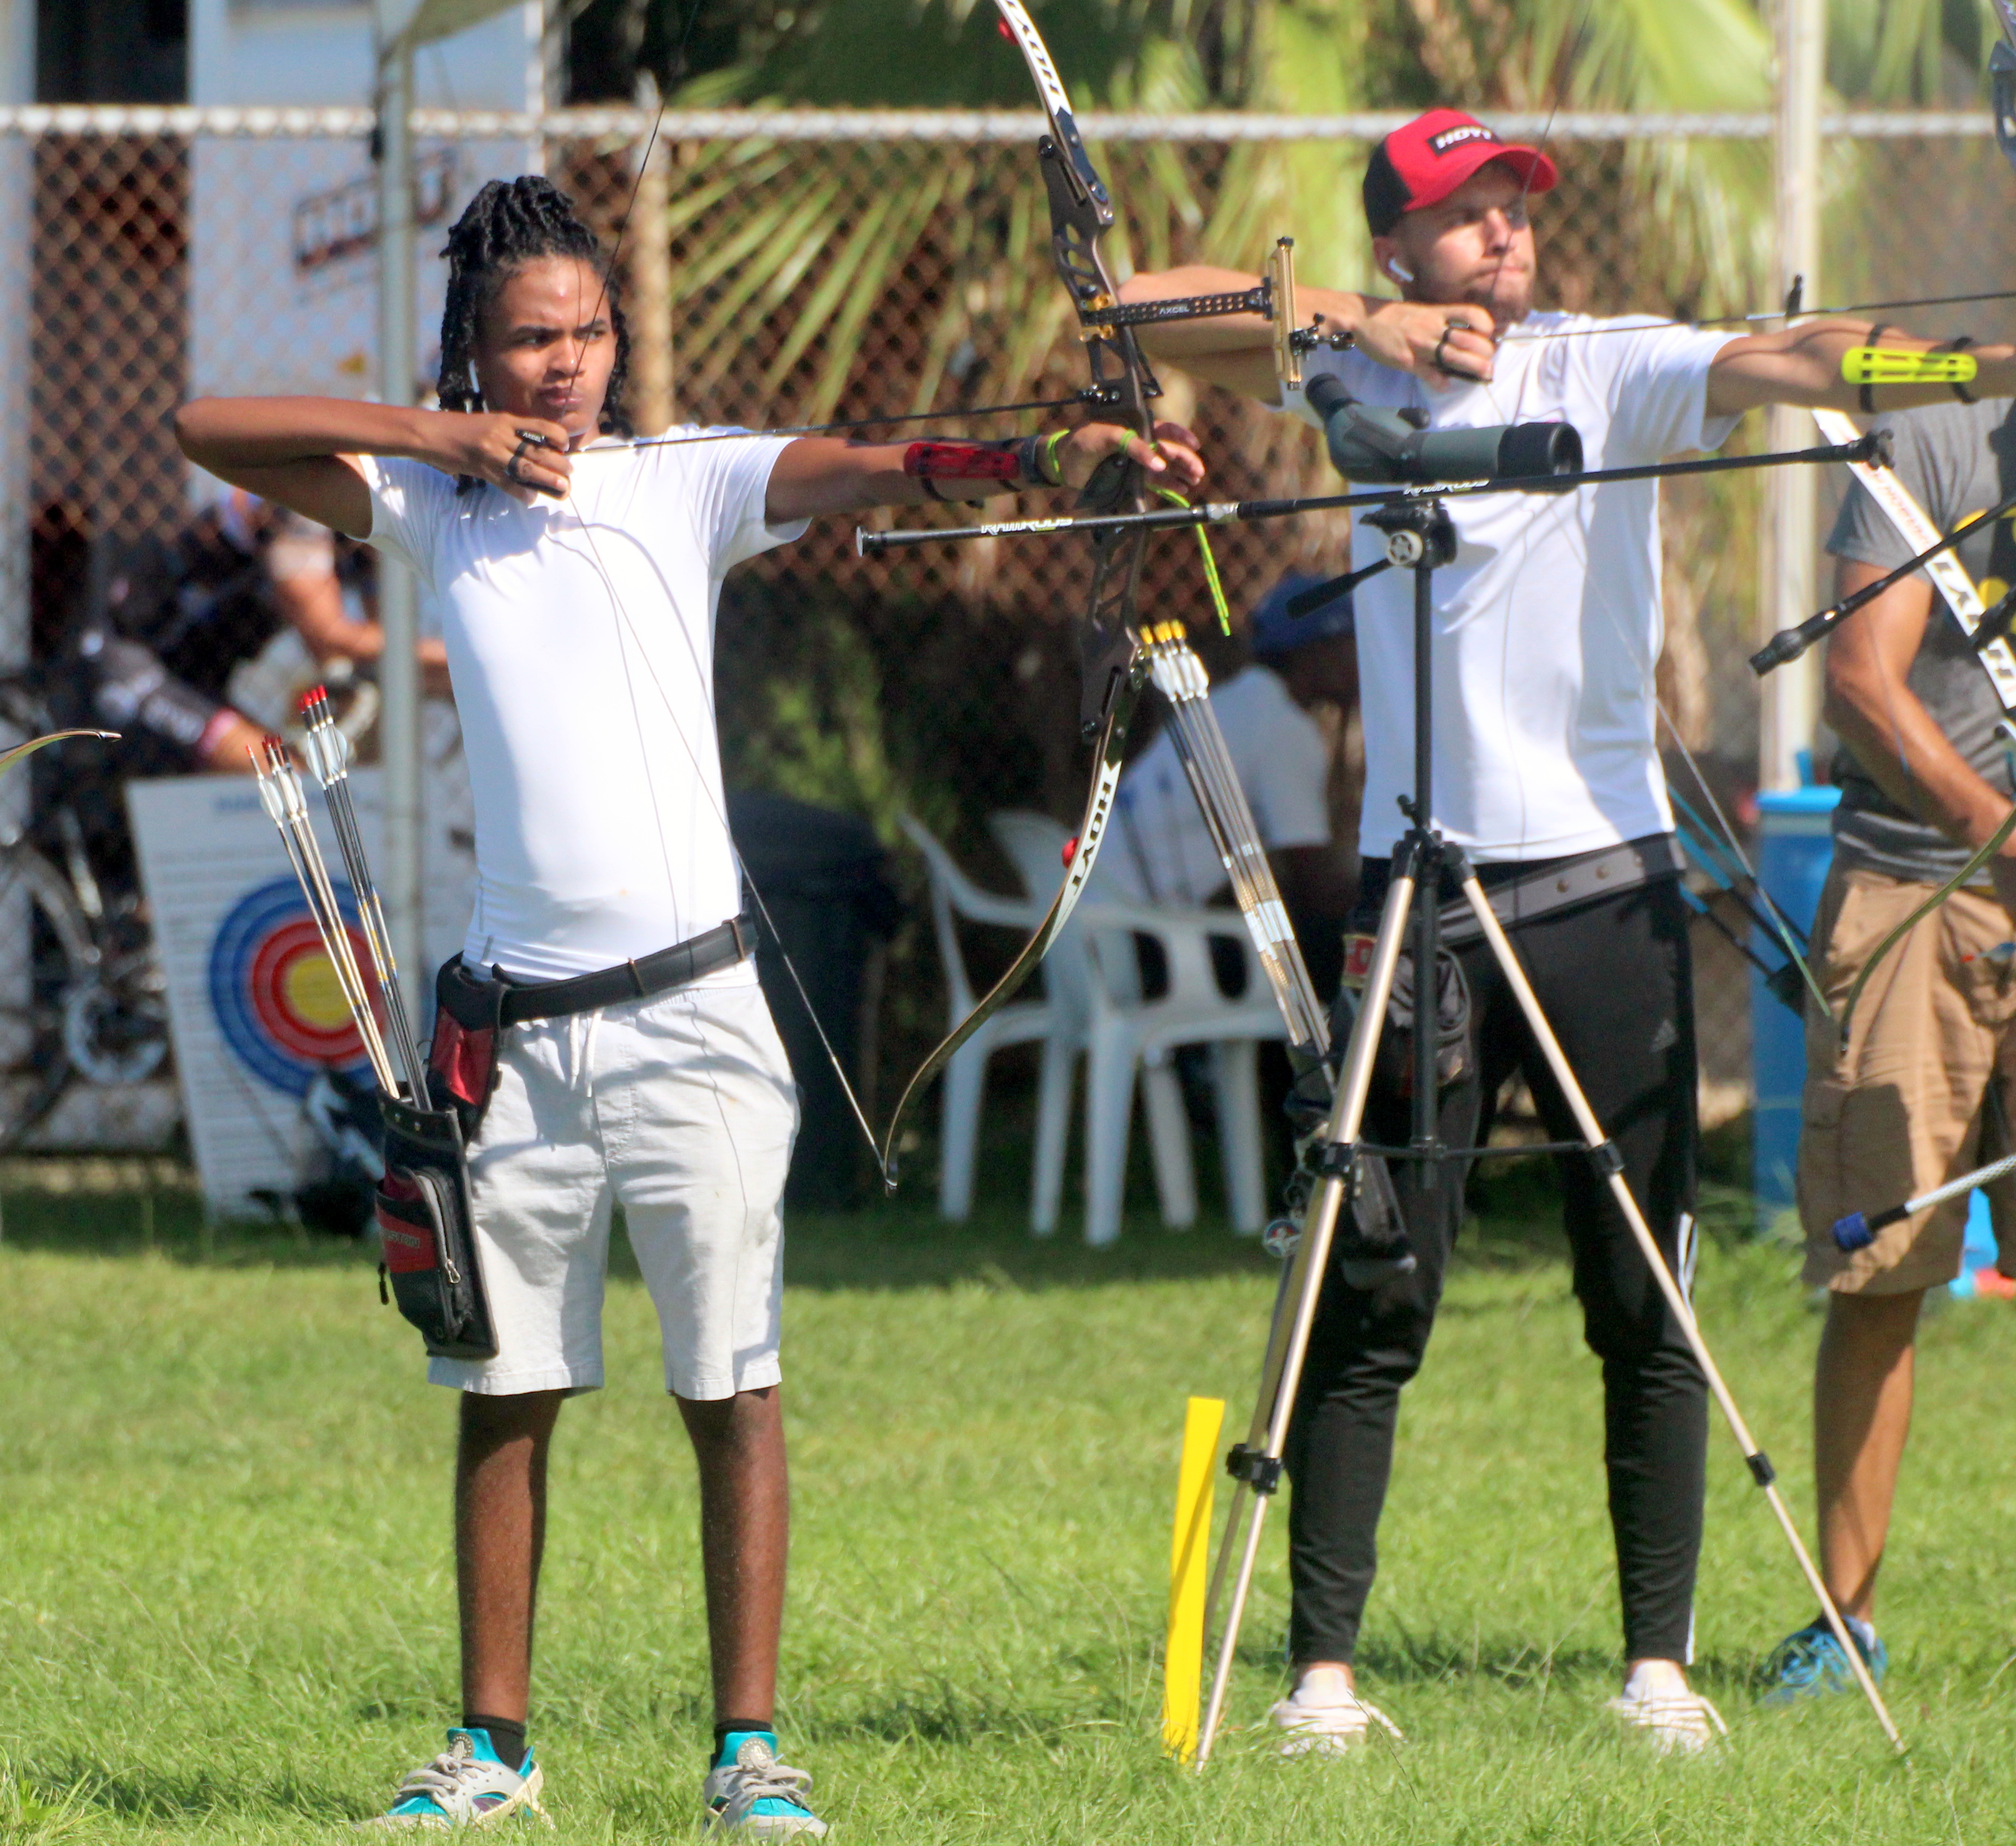 Bermuda Gold Point Archery Round Up (Other Sports)